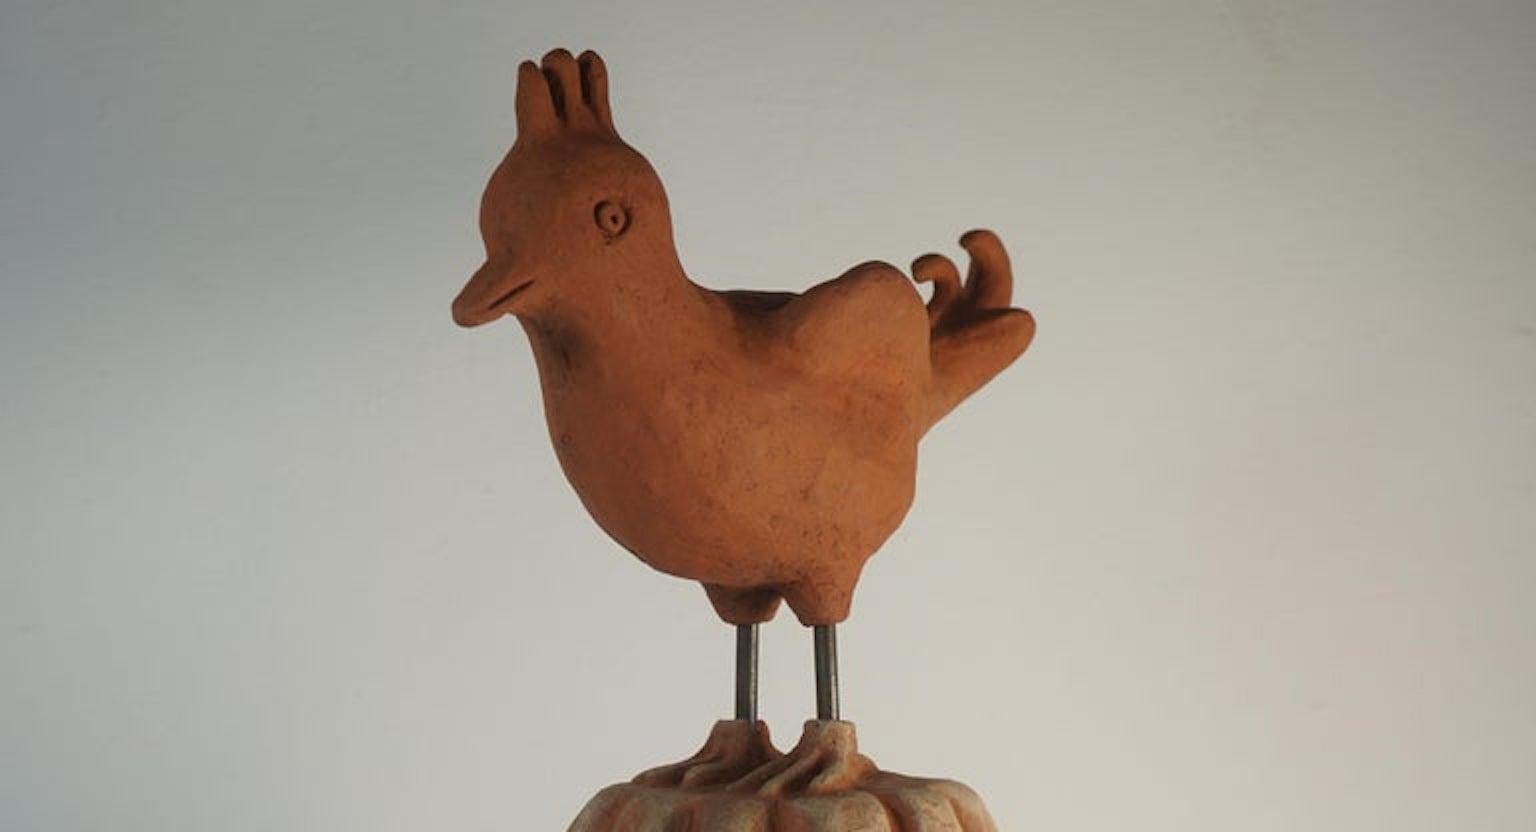 Italian Sculpture Fantastic Bird Model by N. Du Pasquier for Alessio Sarri Editions For Sale